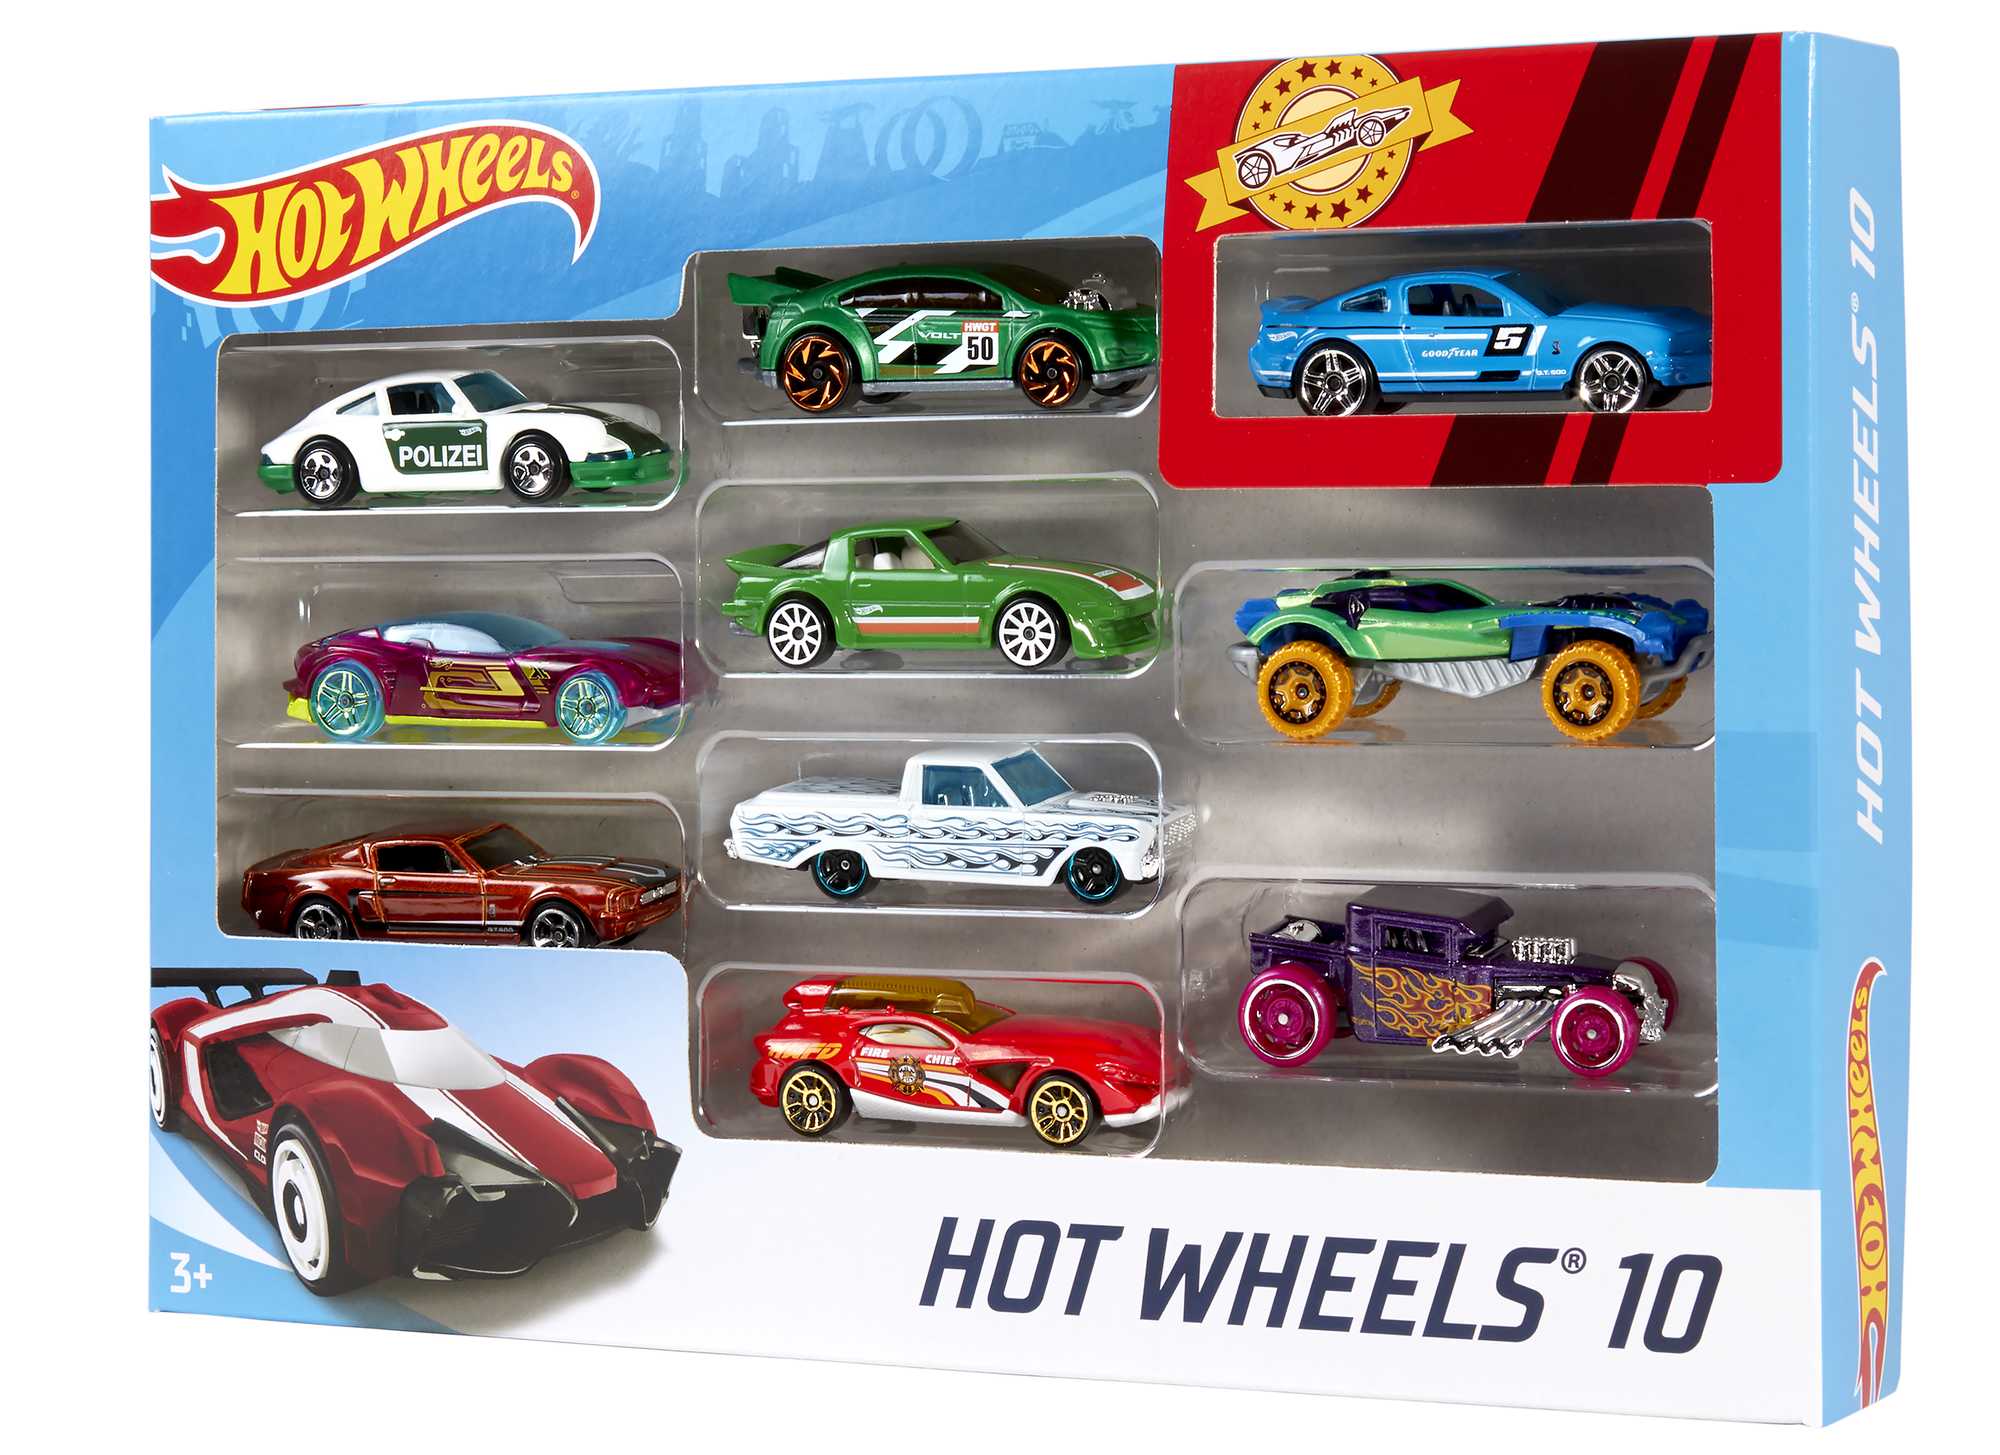 Carros Hot Wheels Com 10 Carros Sortidos Escala 1:64 Mattel